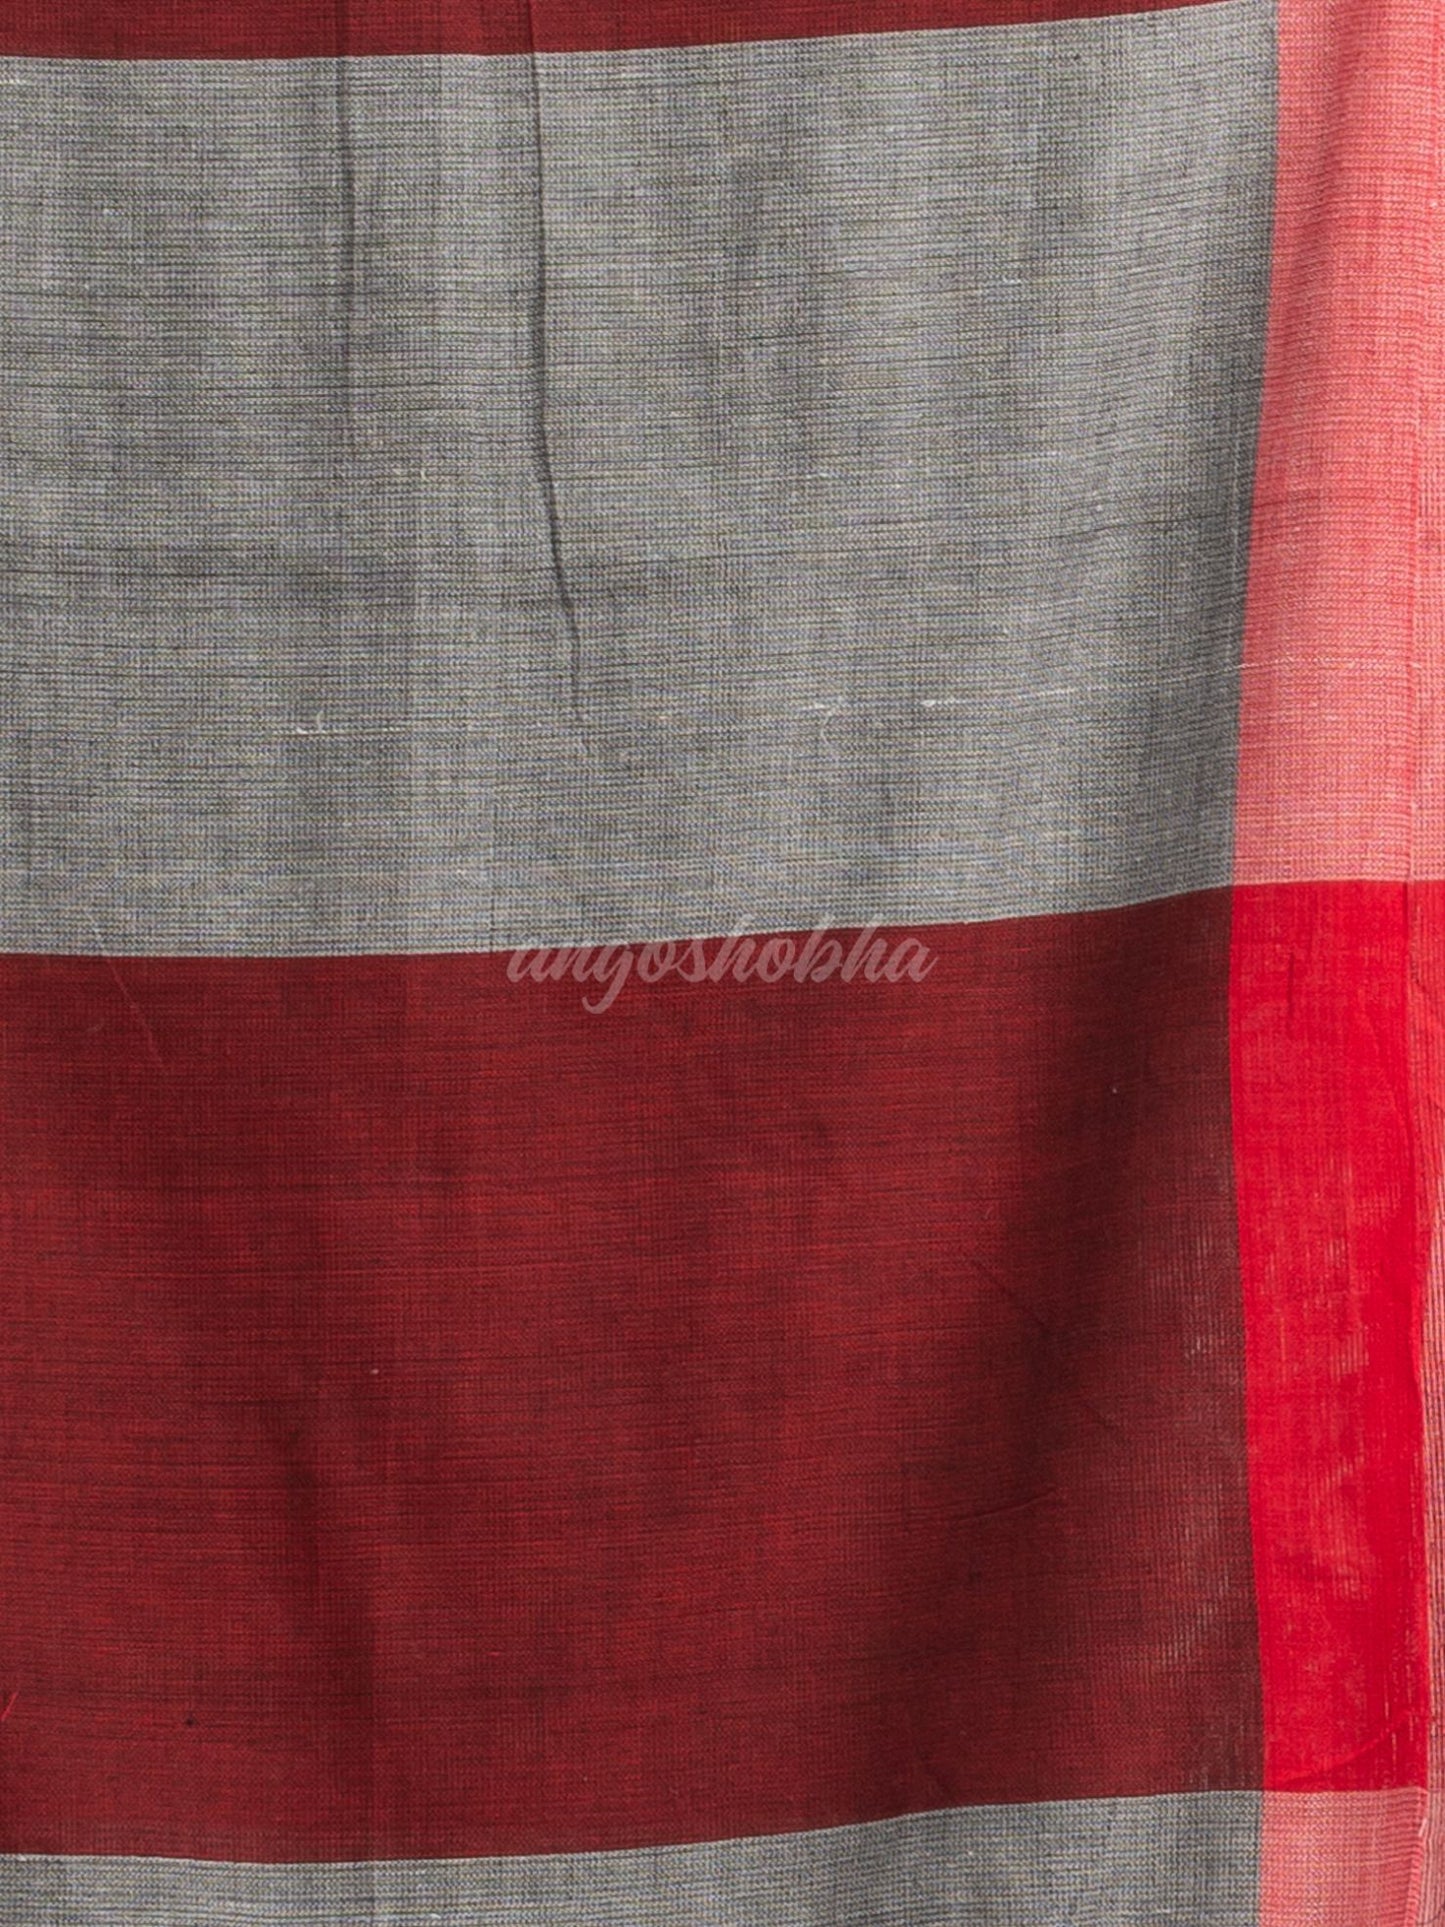 silver all body red strip moklin red border handwoven muslight saree